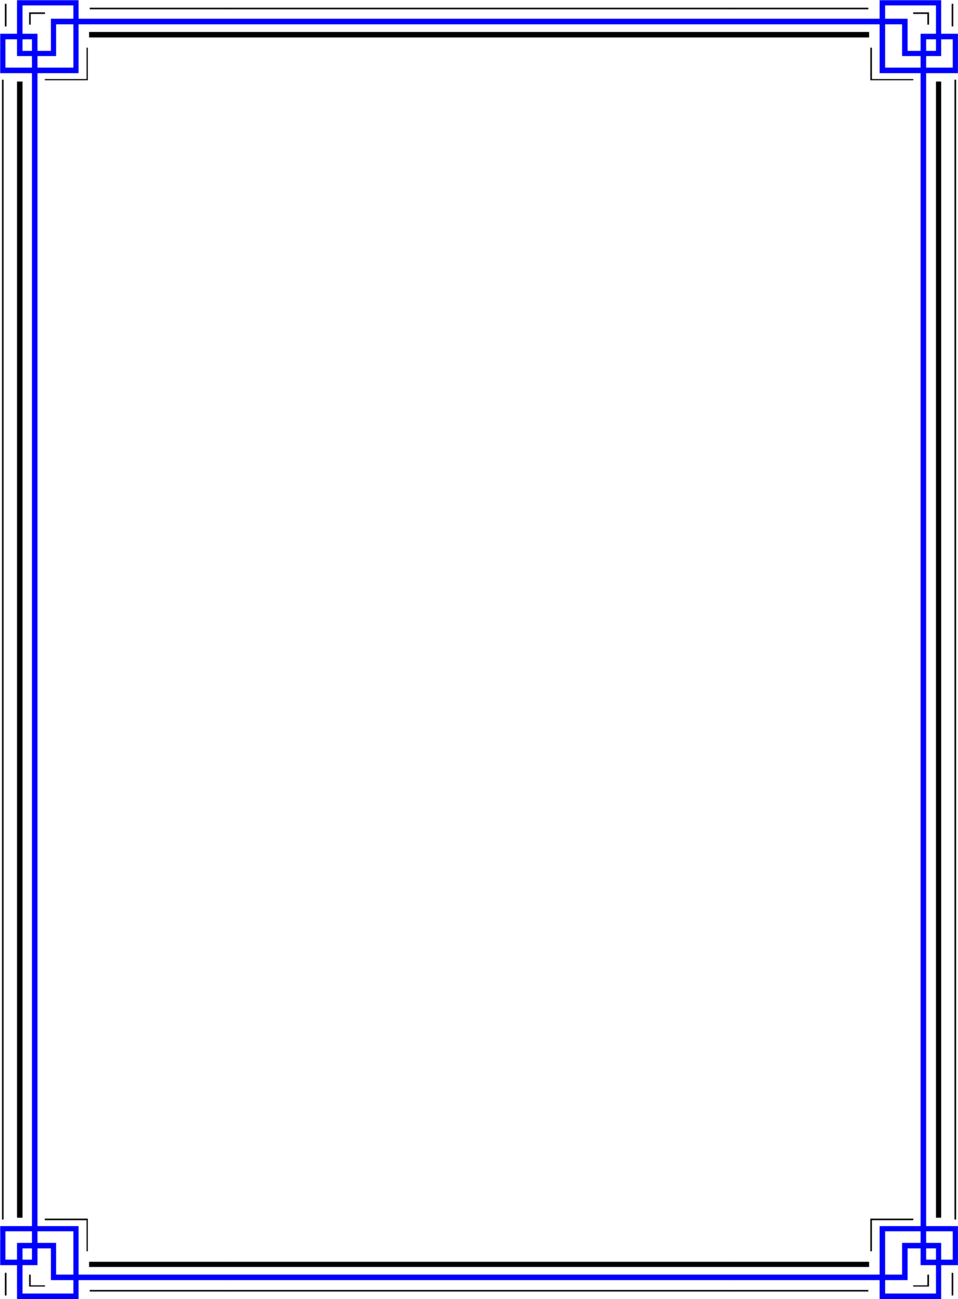 Border Blue   Free Stock Photo   Illustration Of A Blank Blue Frame